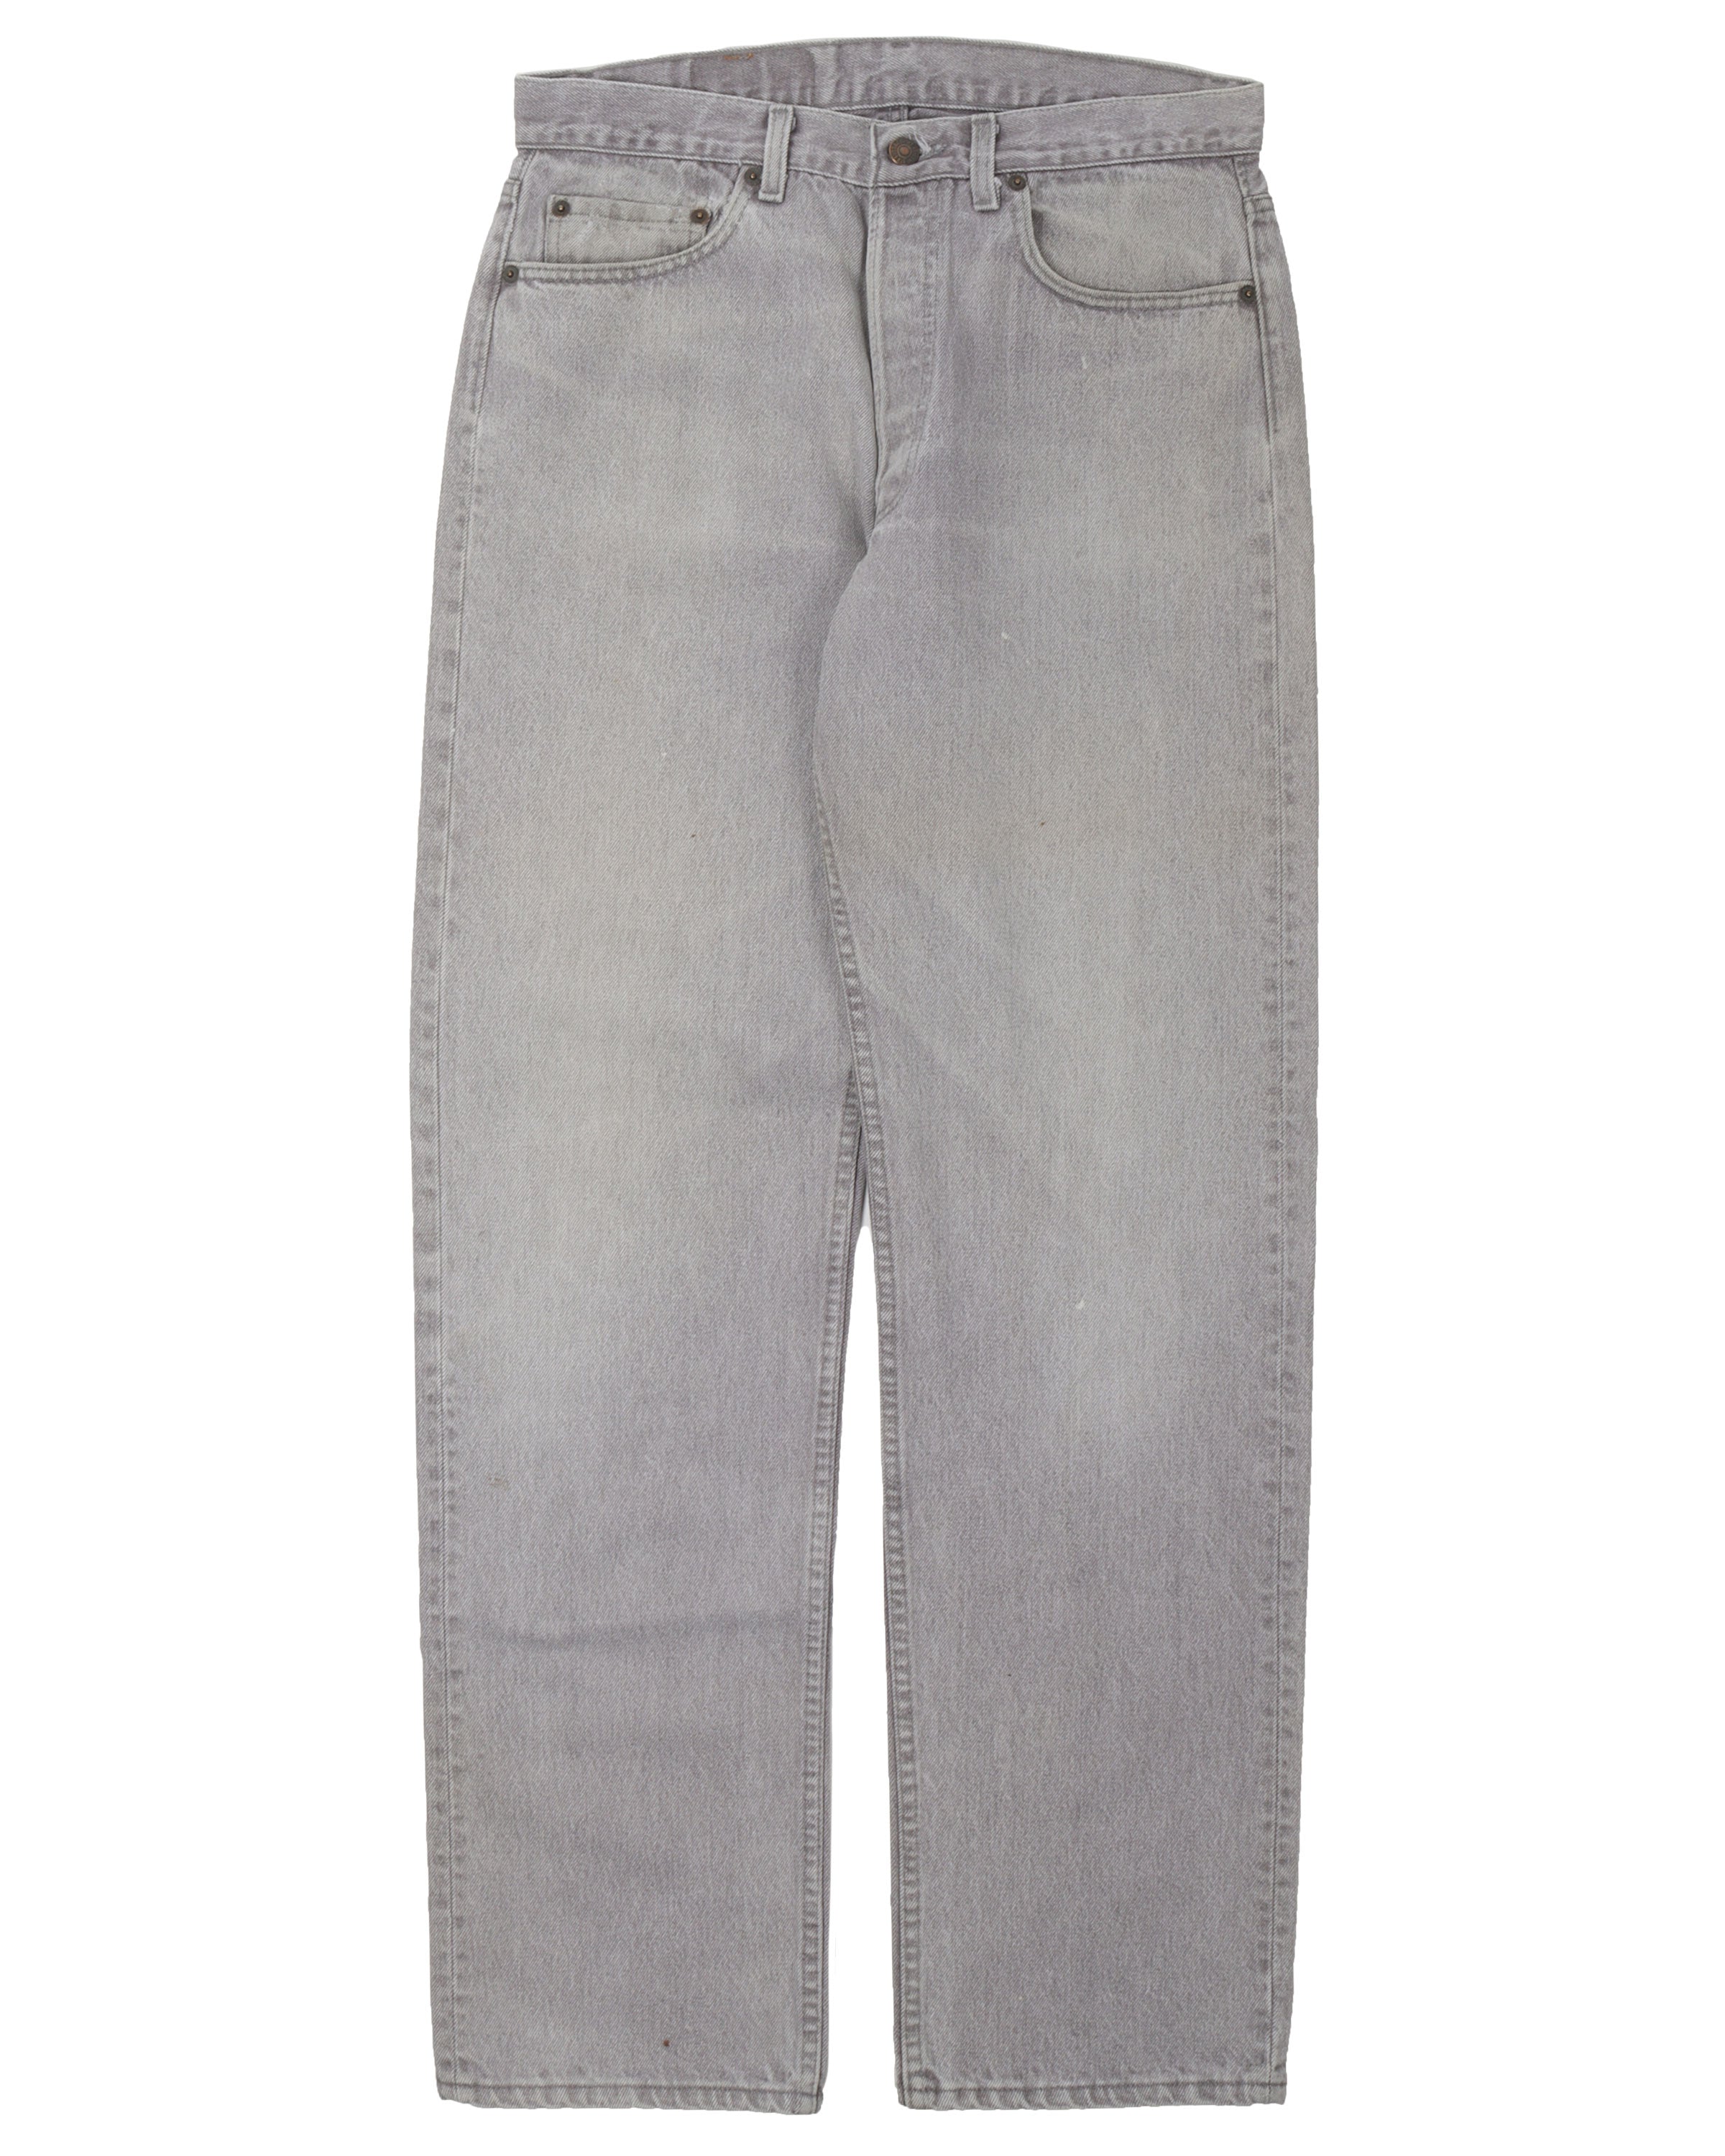 Levi's 501 Light Grey Jeans